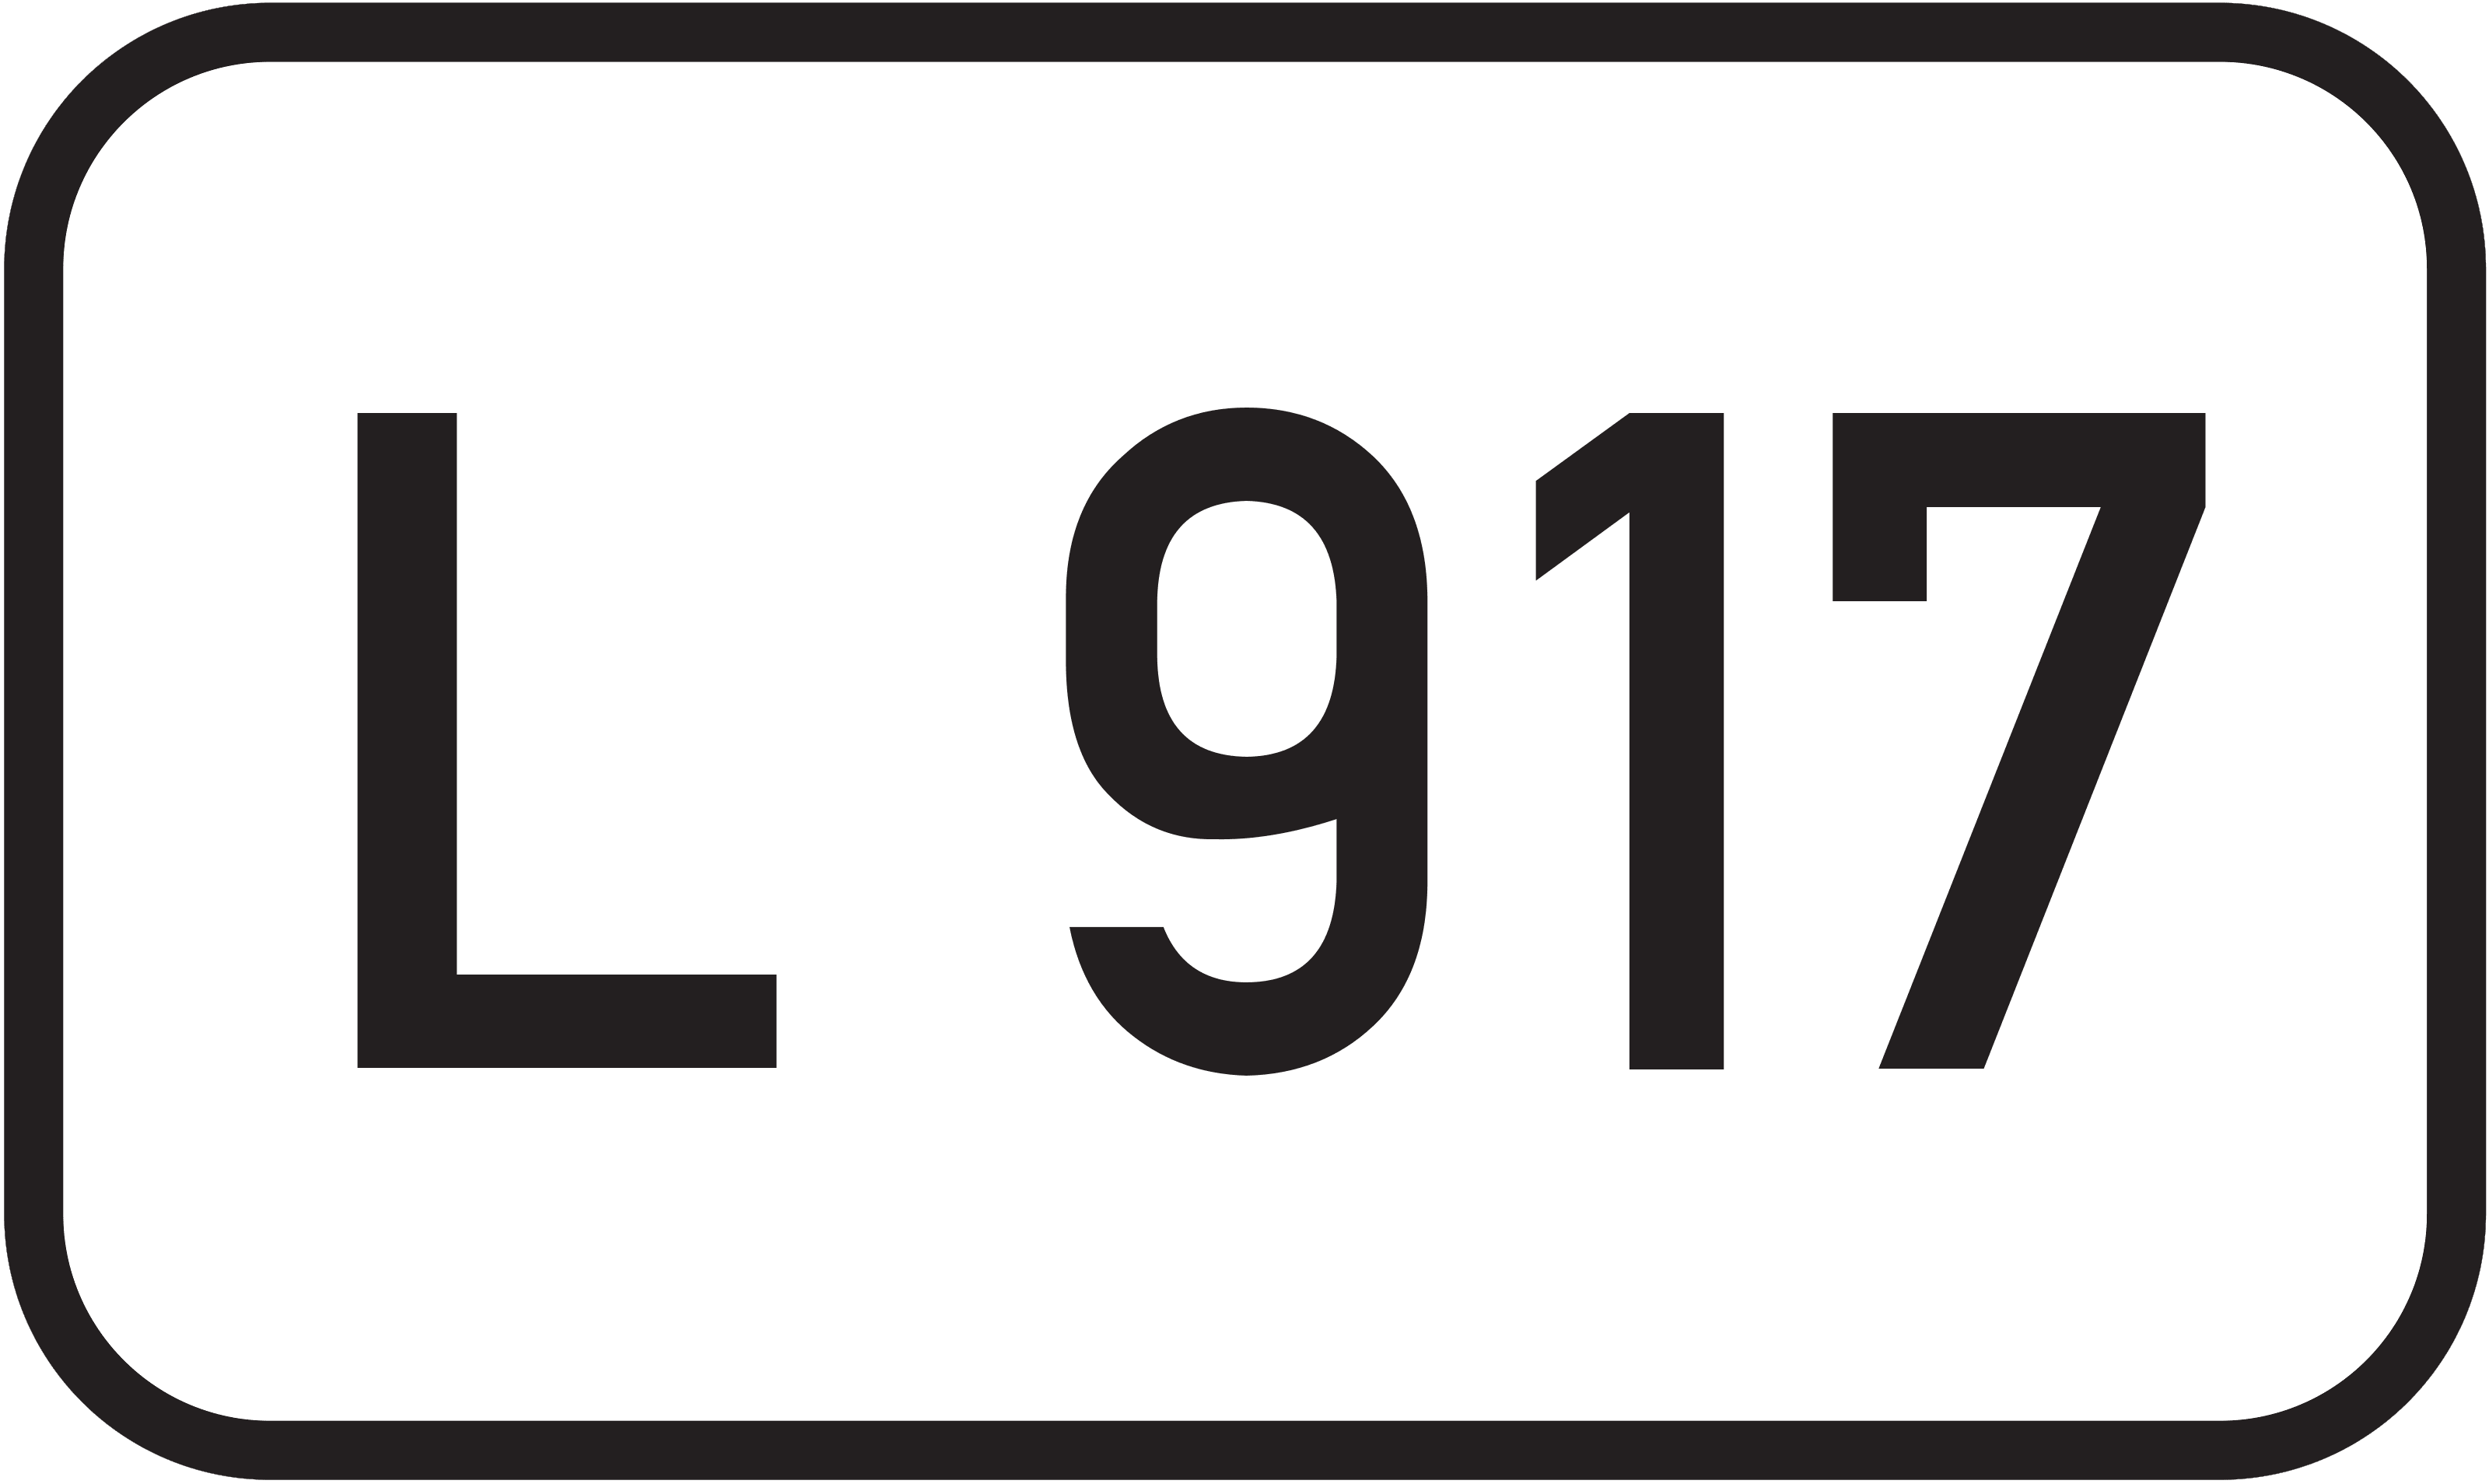 Straßenschild Landesstraße L 917